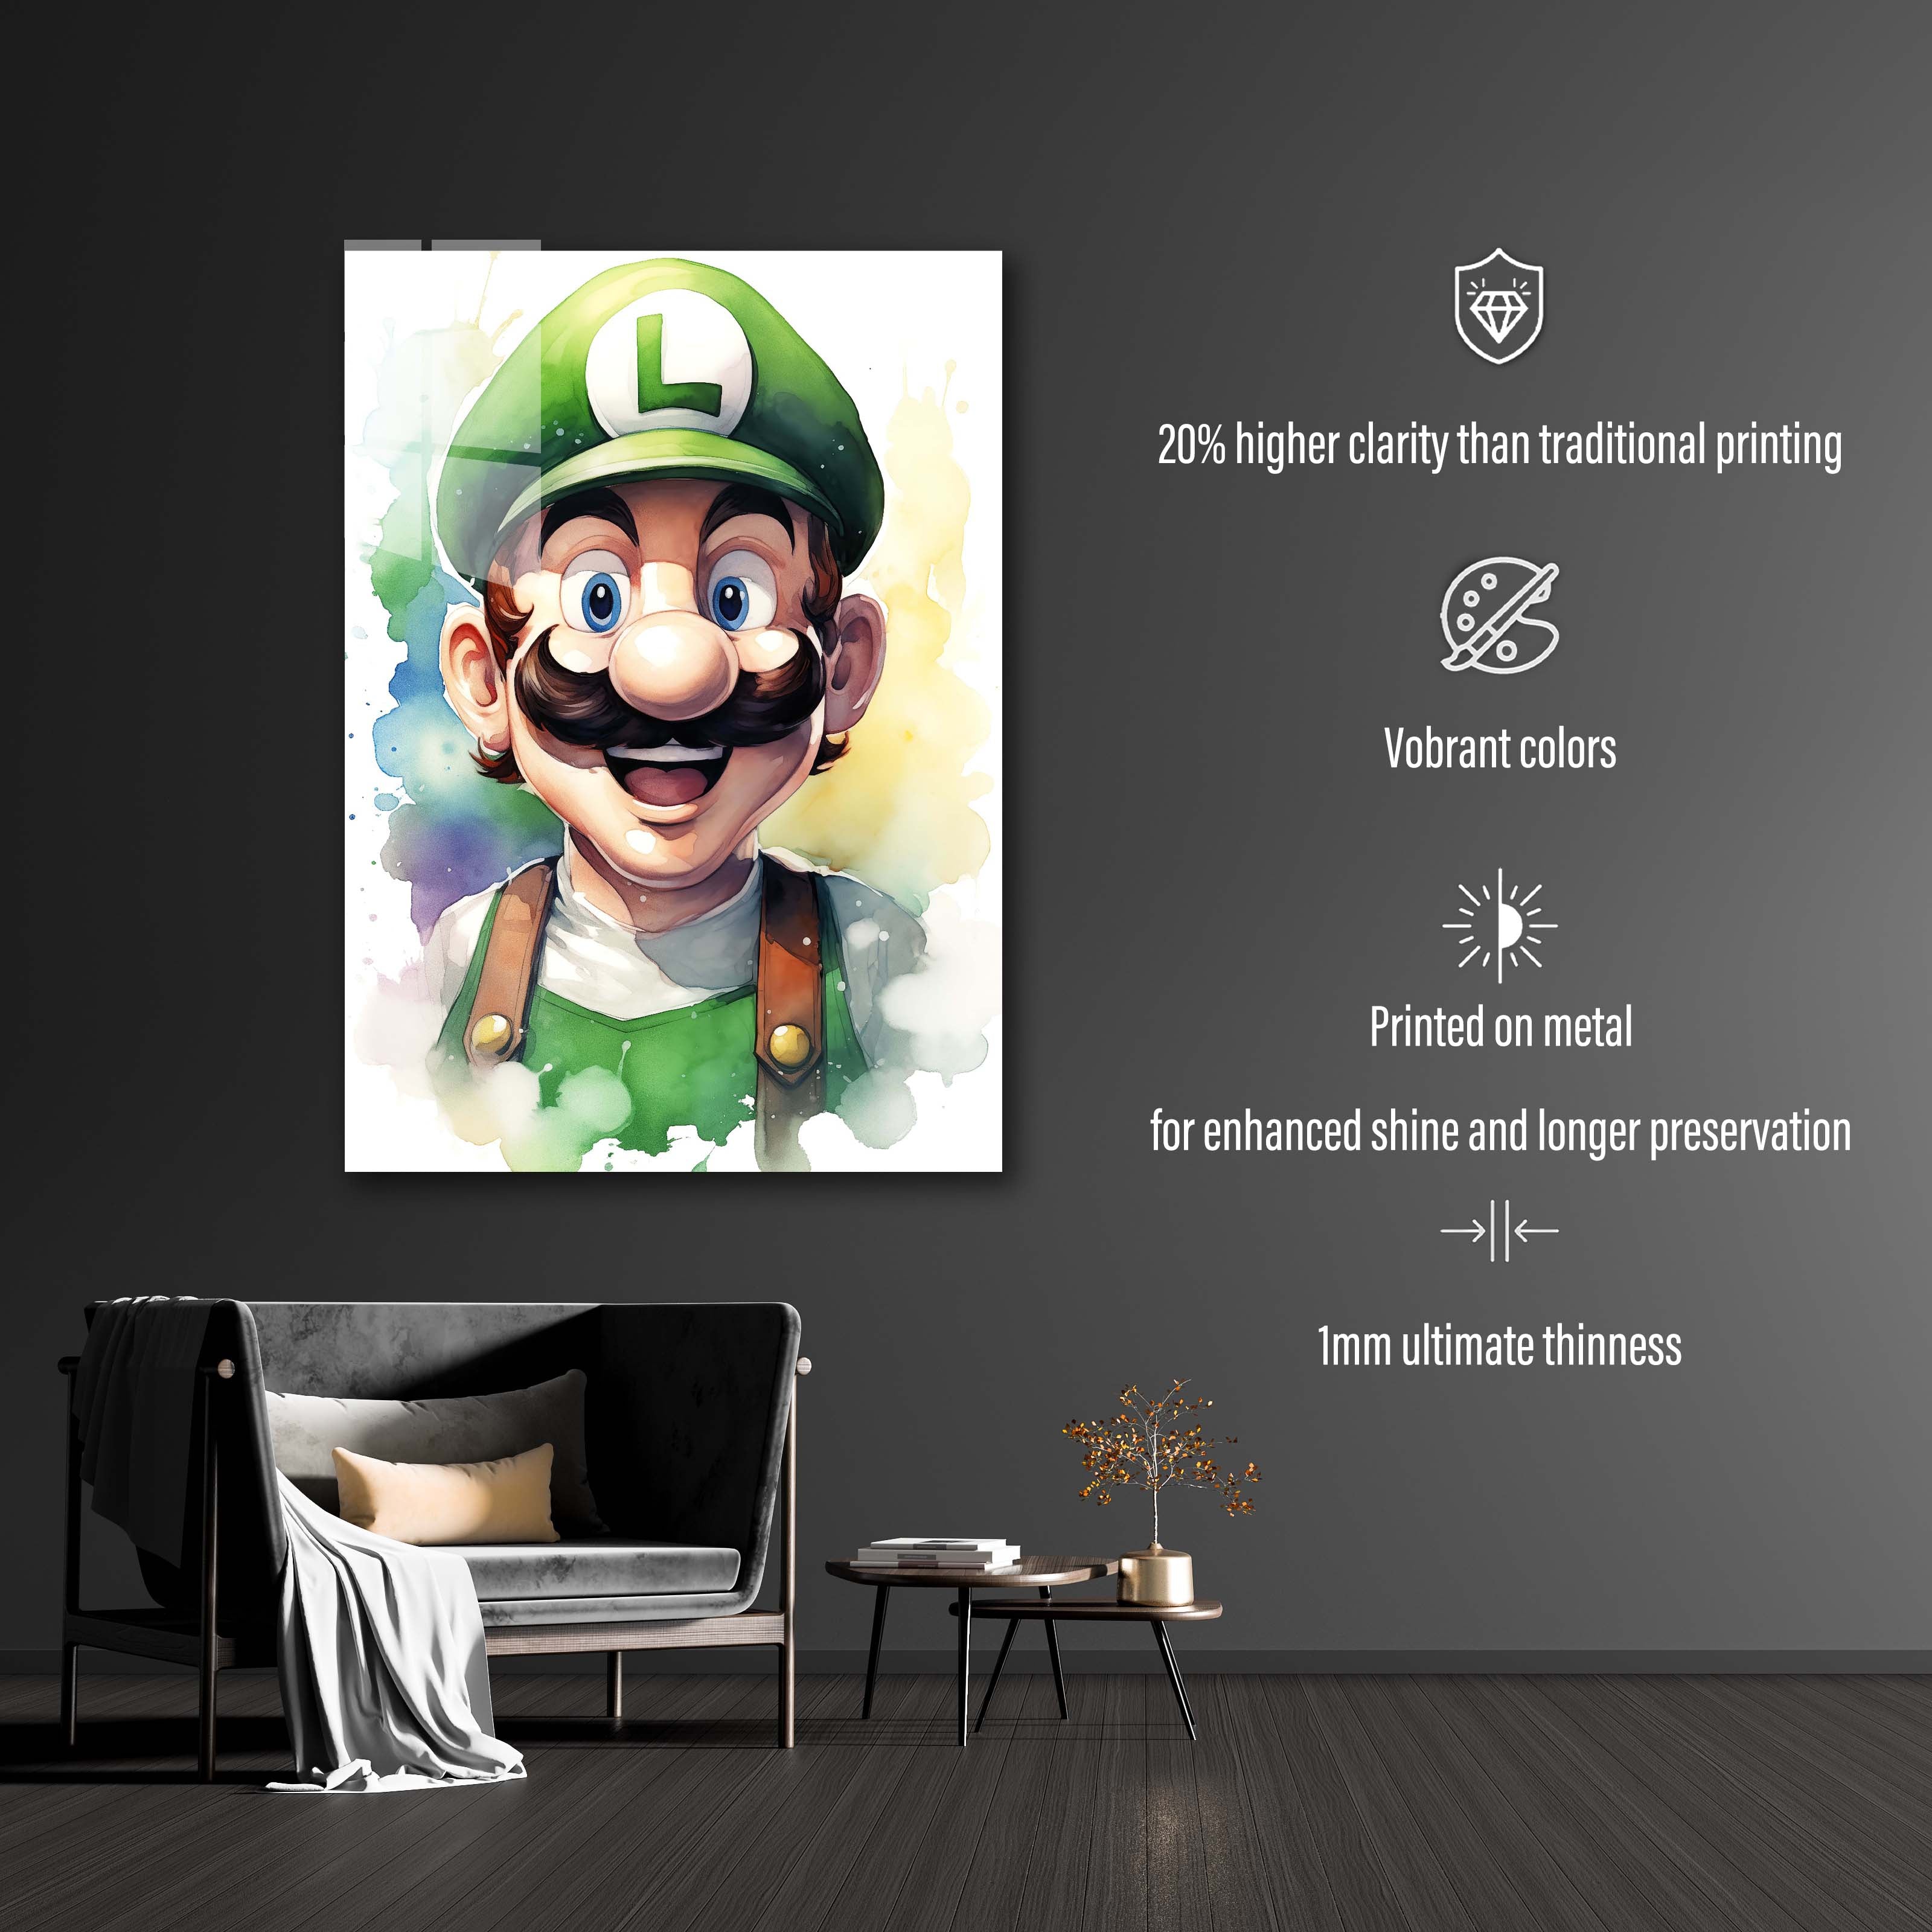 Luigi-designed by @Fluency Room